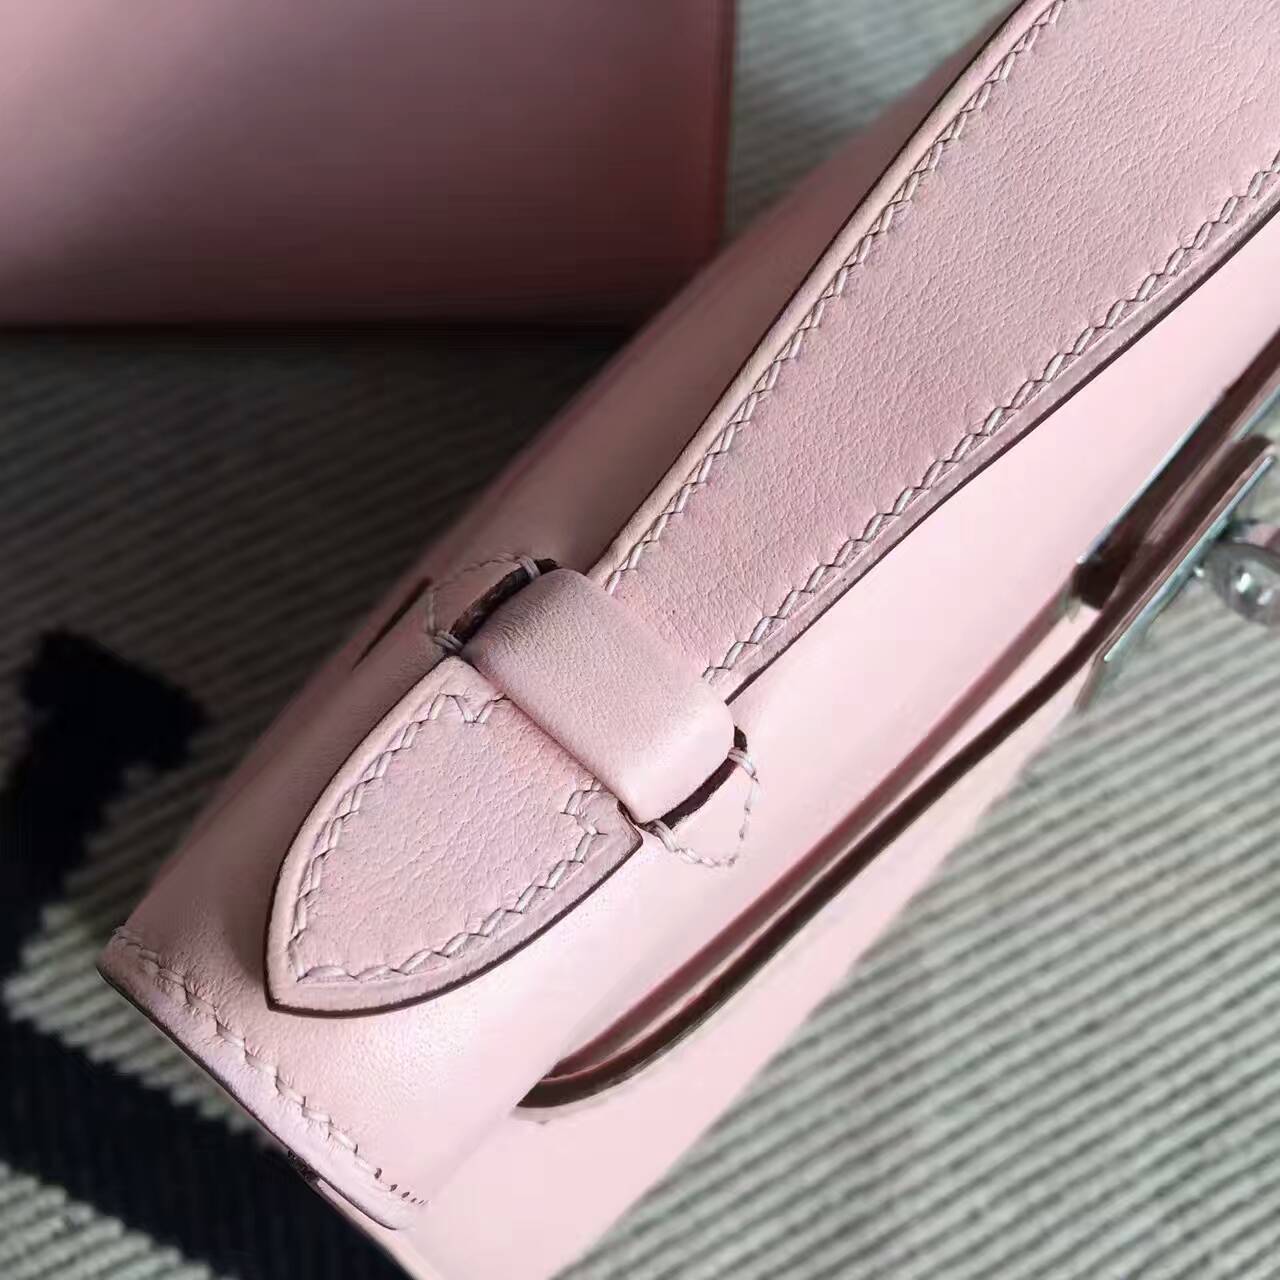 On Sale Hermes Swift Calfskin Leather Minikelly Clutch Bag in 3Q Rose Sakura